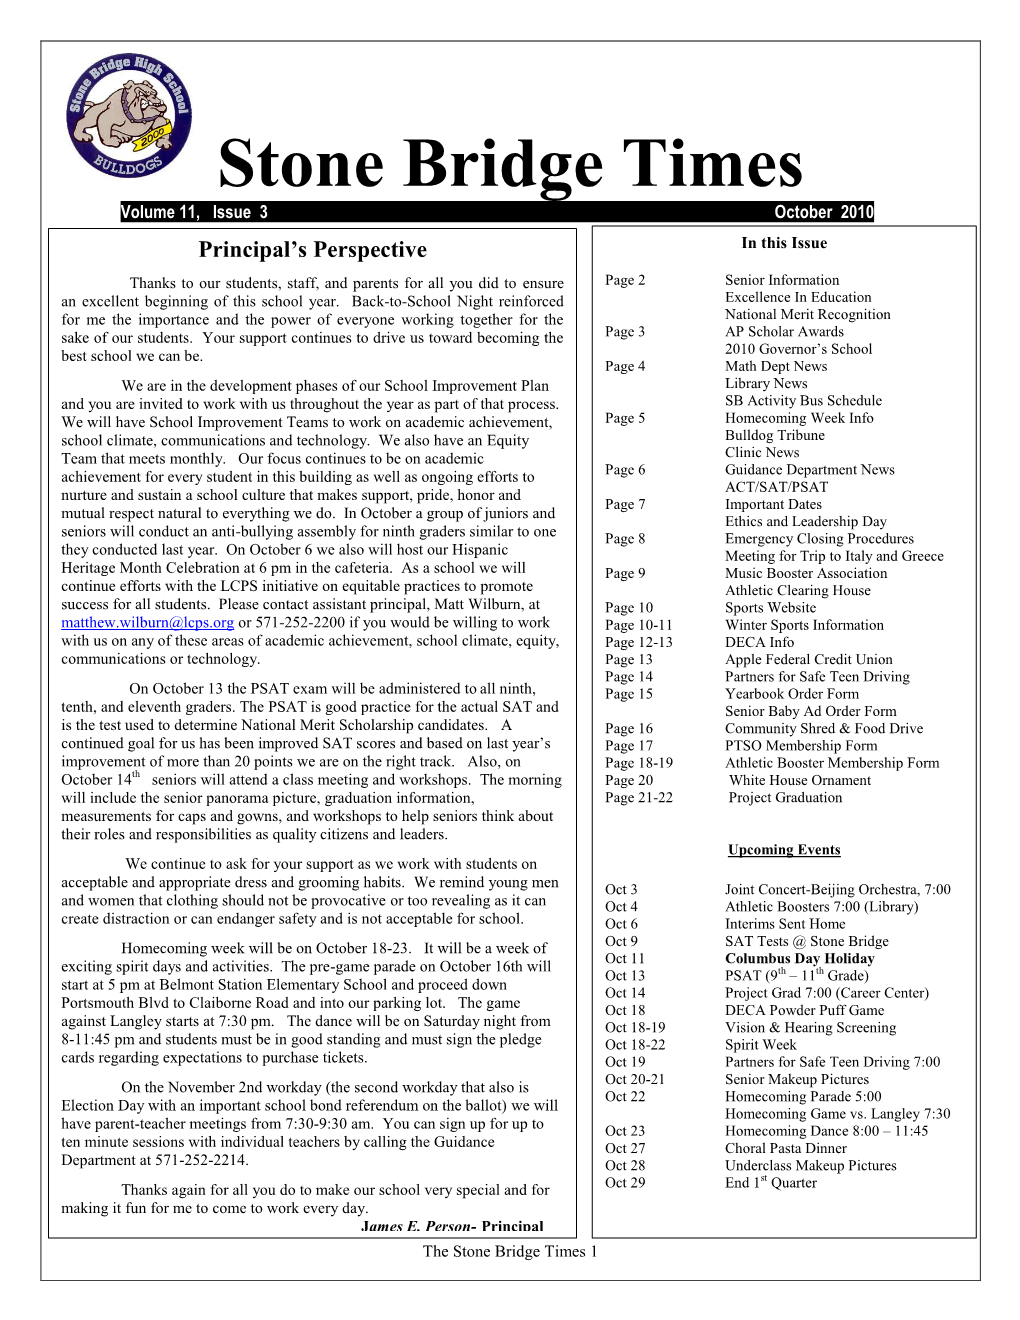 The Stone Bridge Times 1